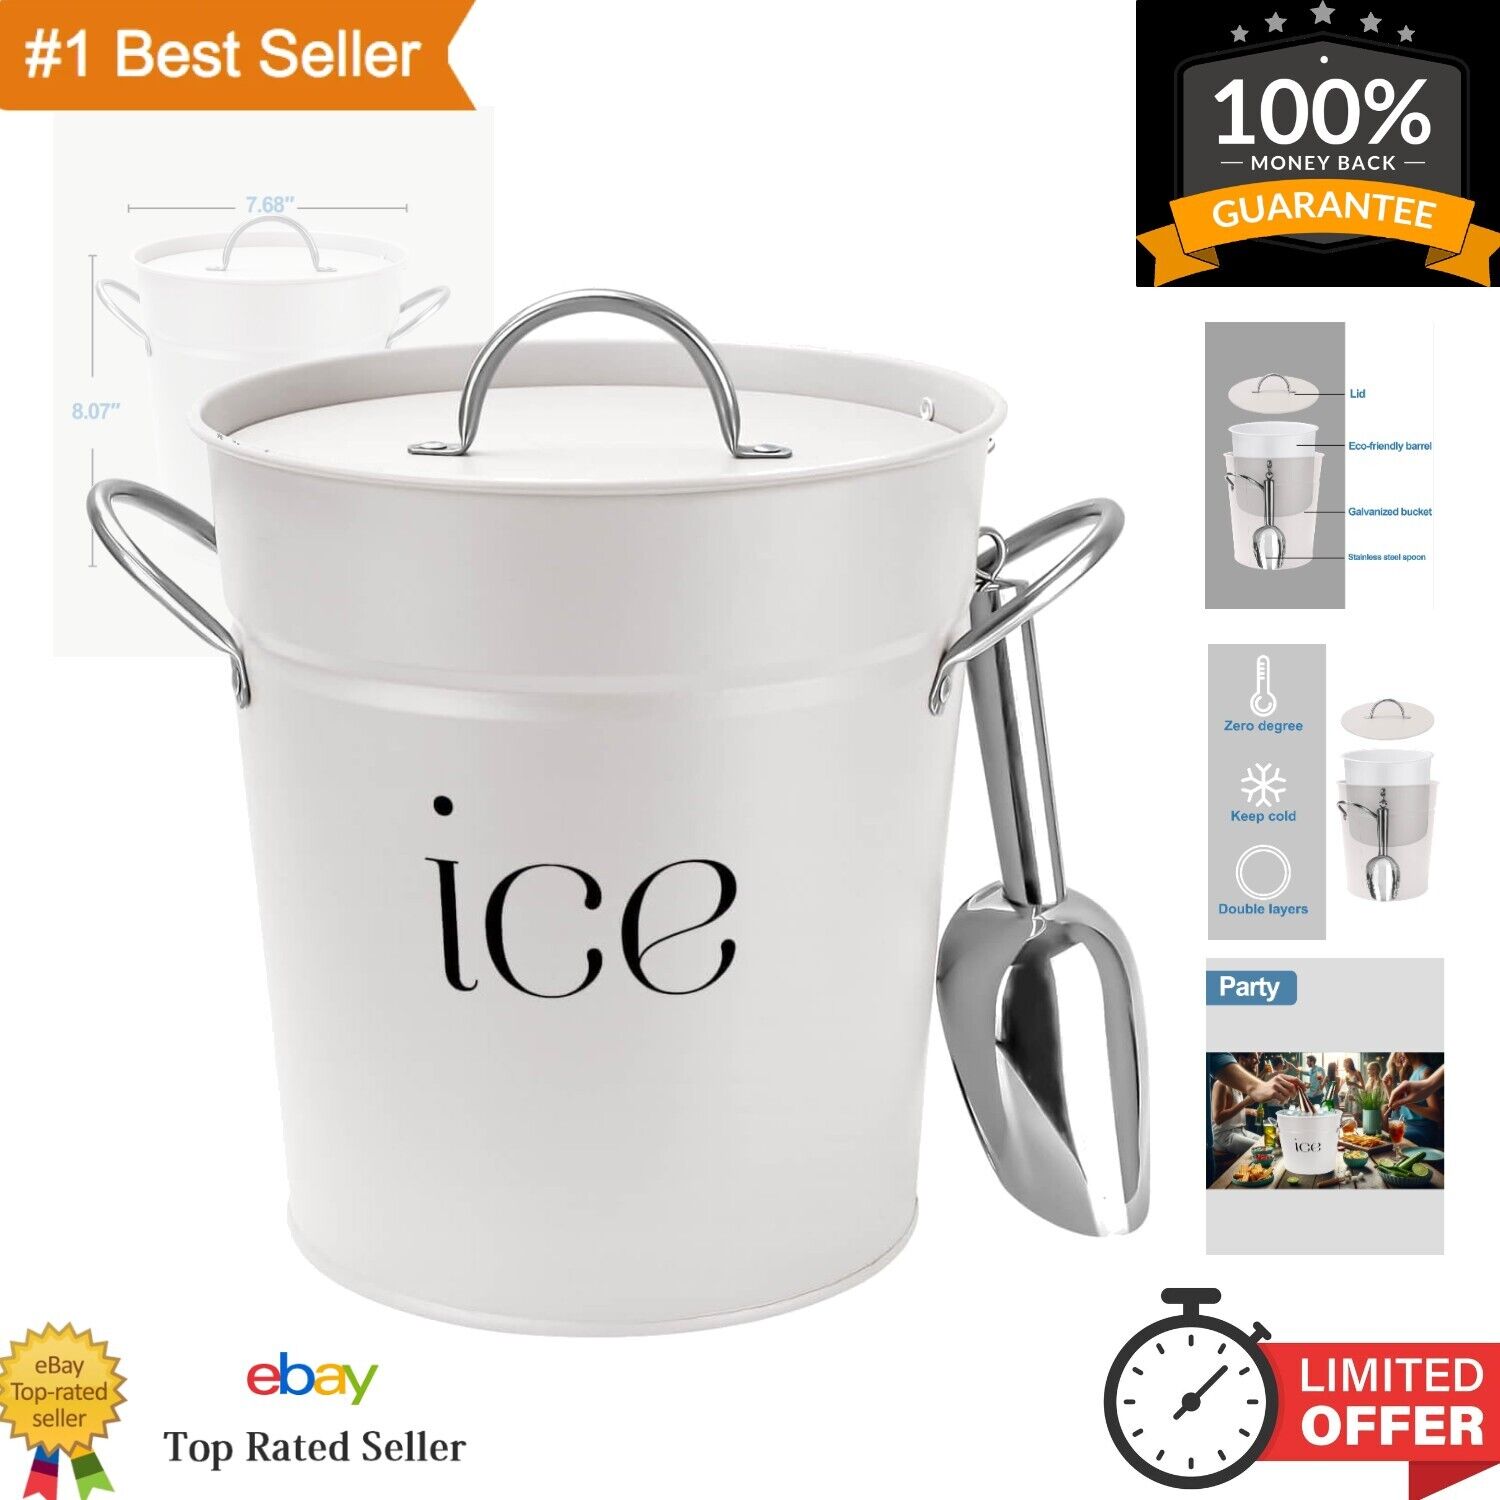 Stylish White Ice Bucket Set with Scoop and Handles - Eco-Friendly Entertaining